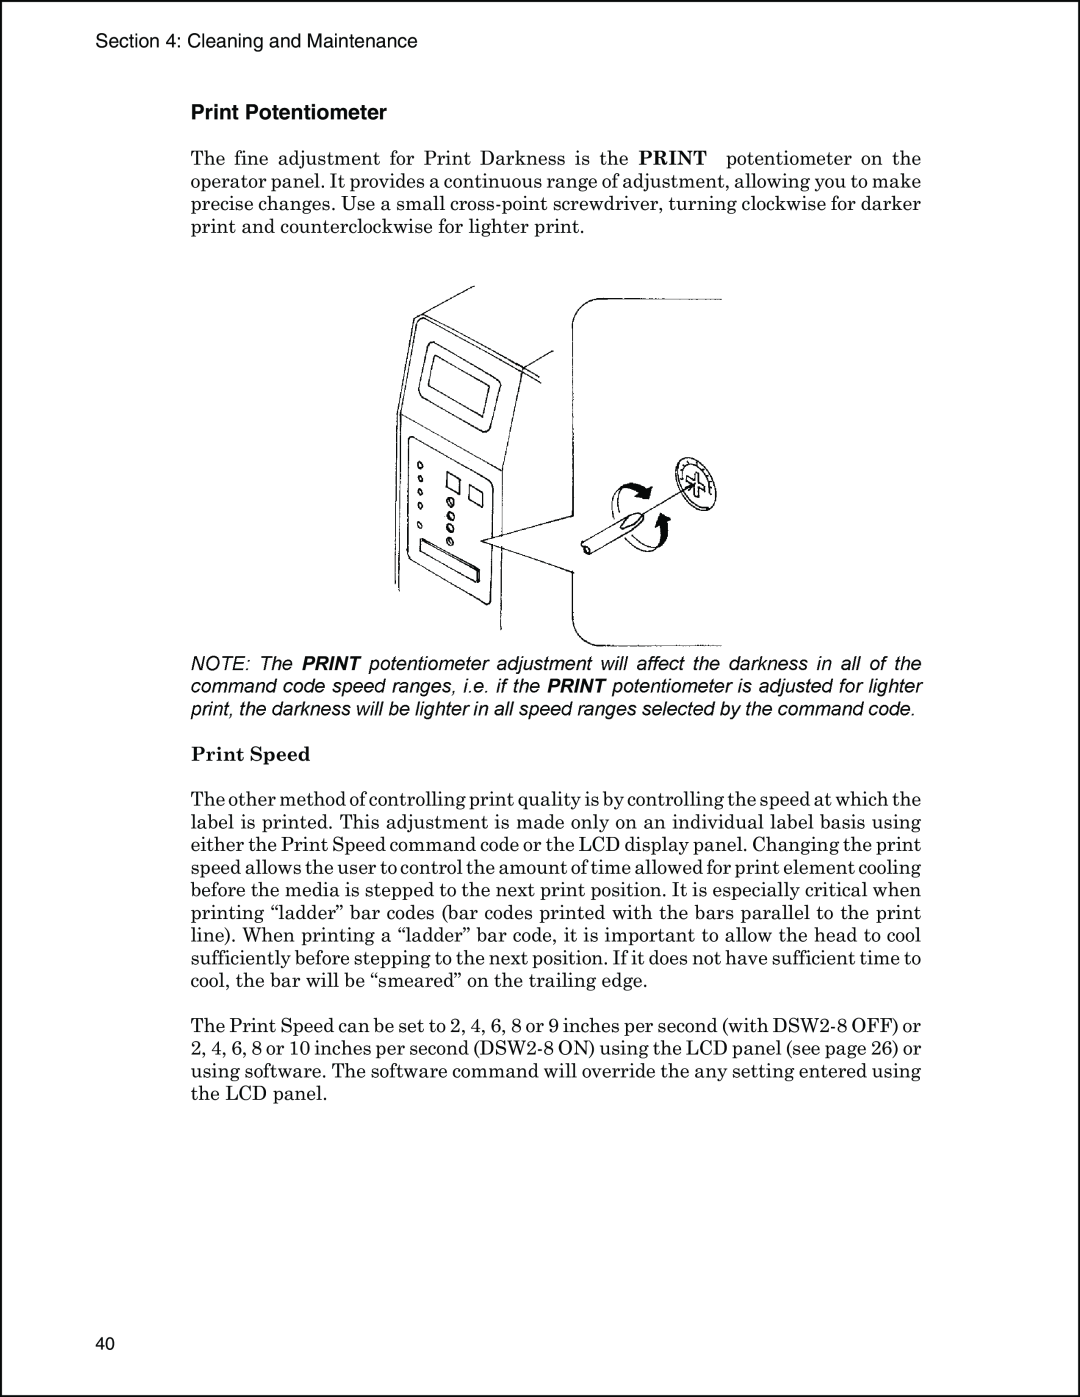 Panduit PTR3E manual Print Potentiometer, print,thedarkness, NOTEcommandThecode PRINT, darknessinallofthe, Print Speed 